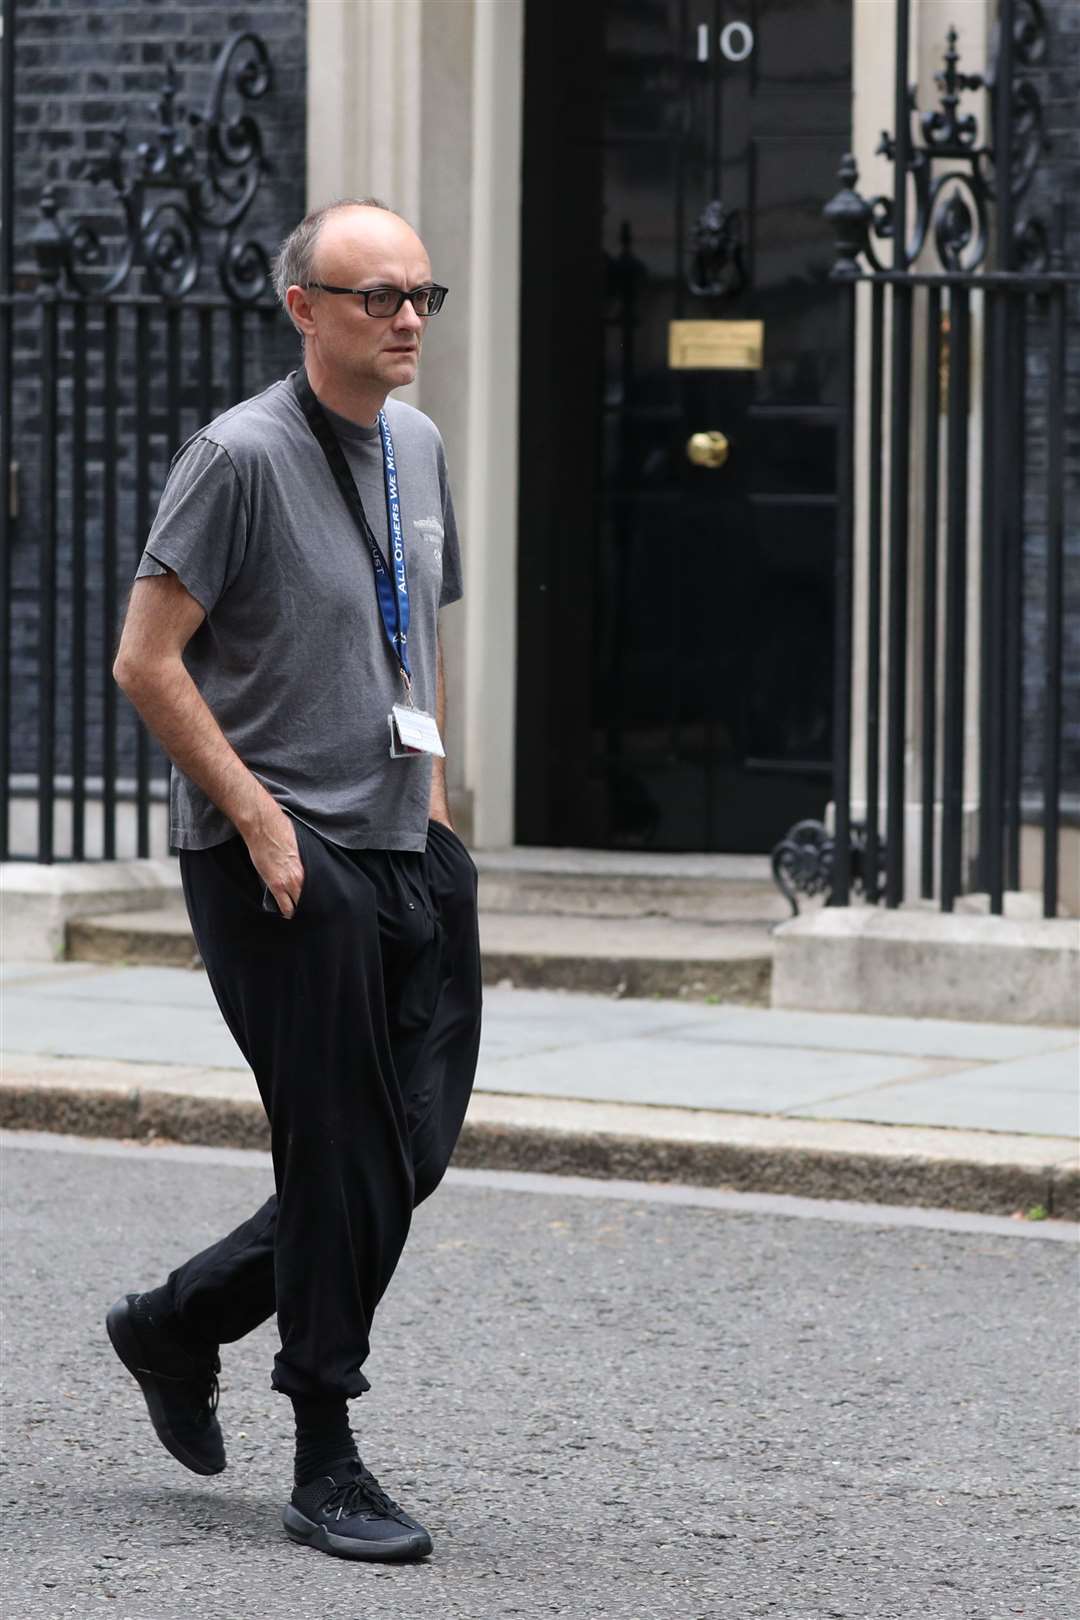 Dominic Cummings in Downing Street (Jonathan Brady/PA)